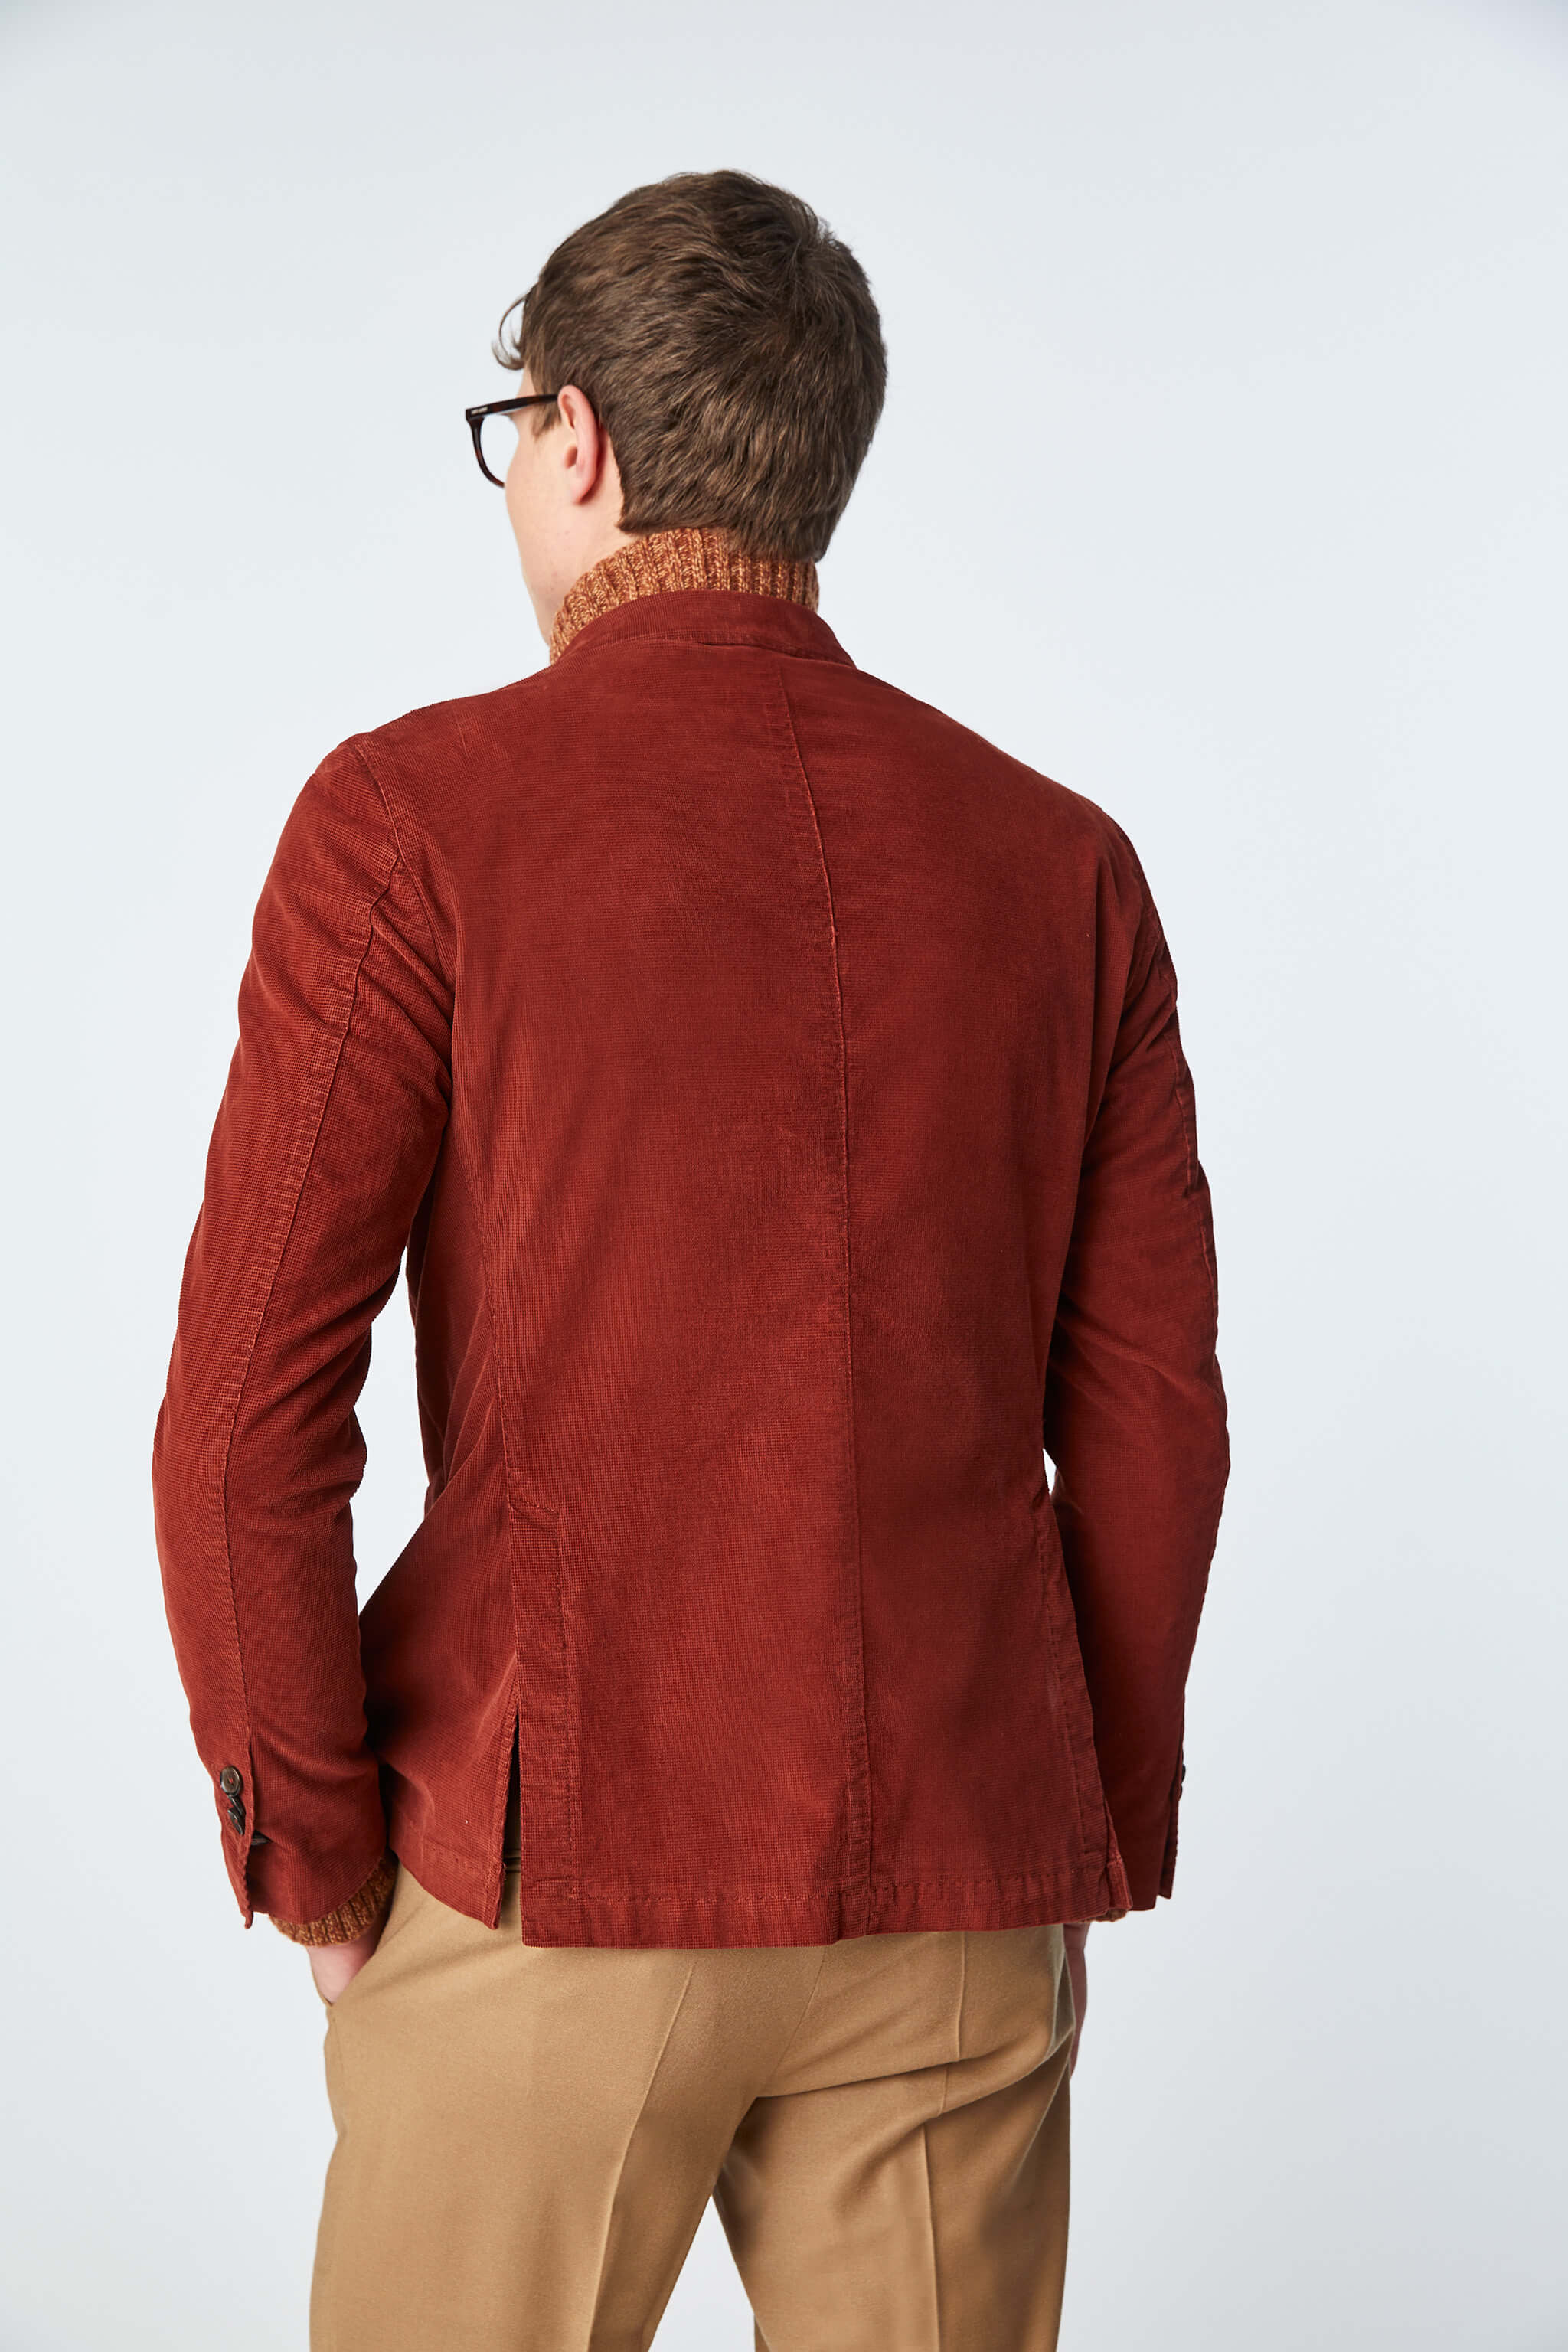 Garment-dyed slim-fit JACK jacket in rust